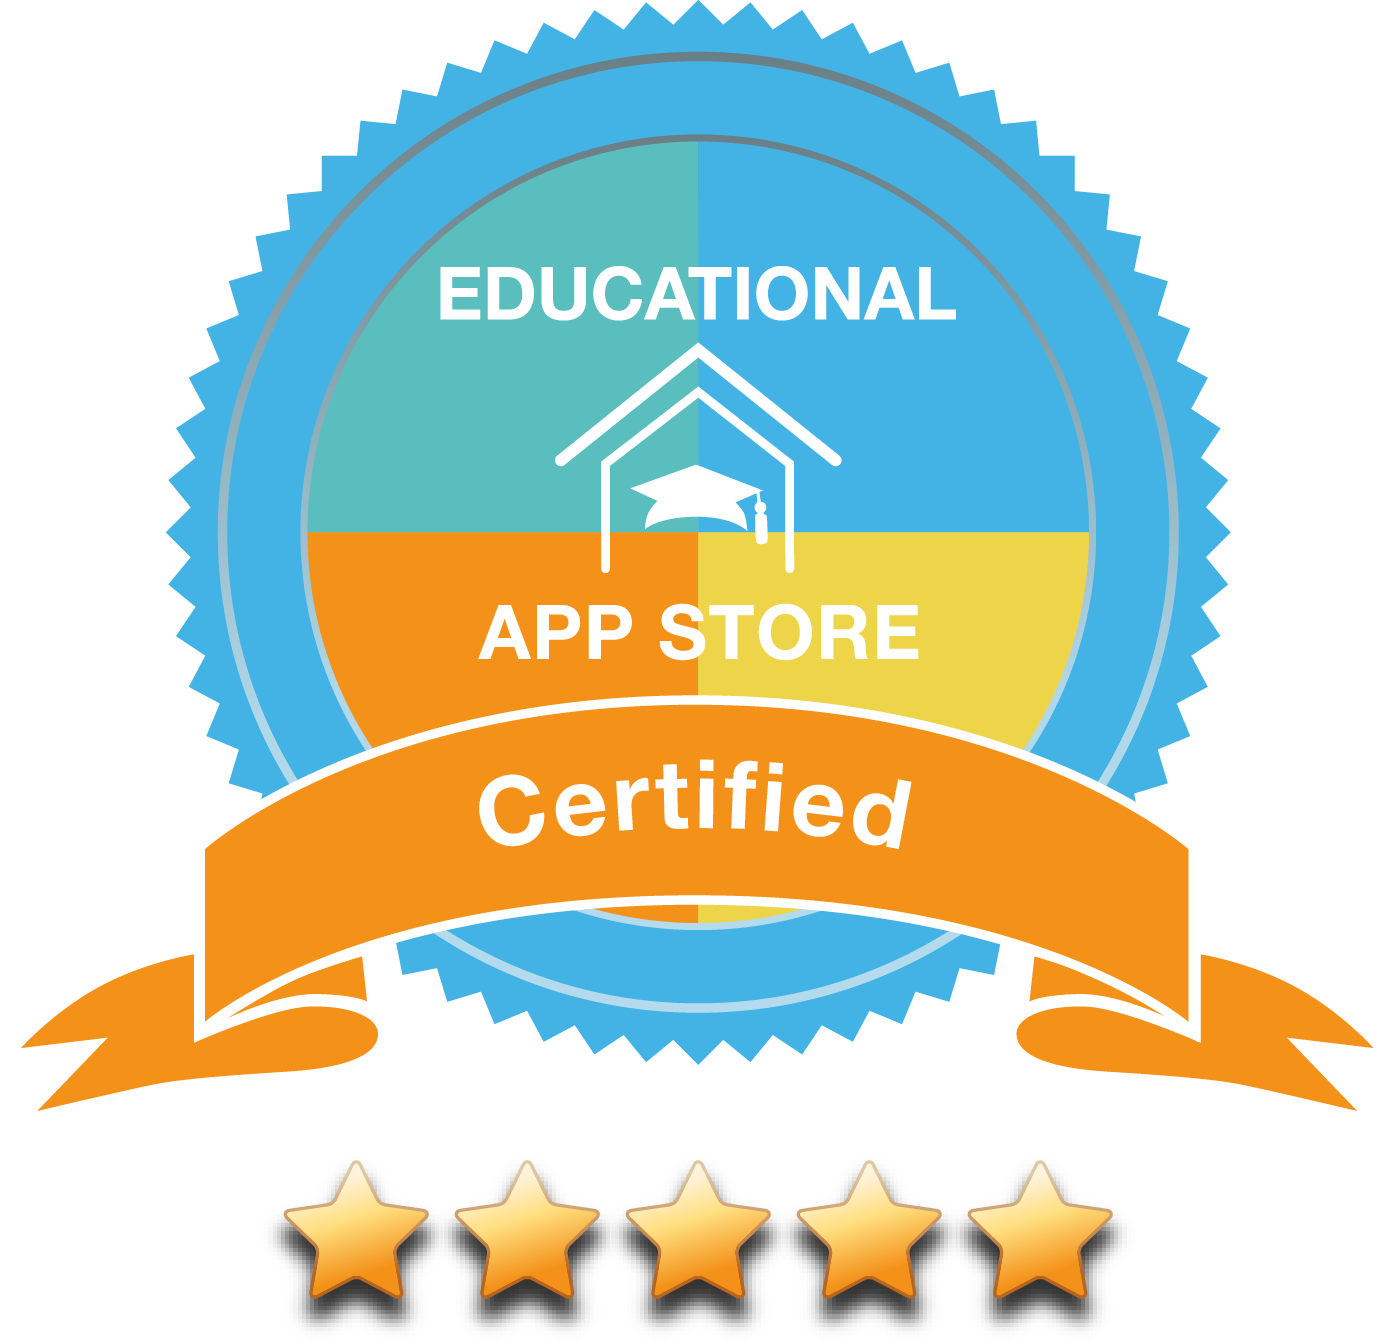 Education App Store 5 Star Rating